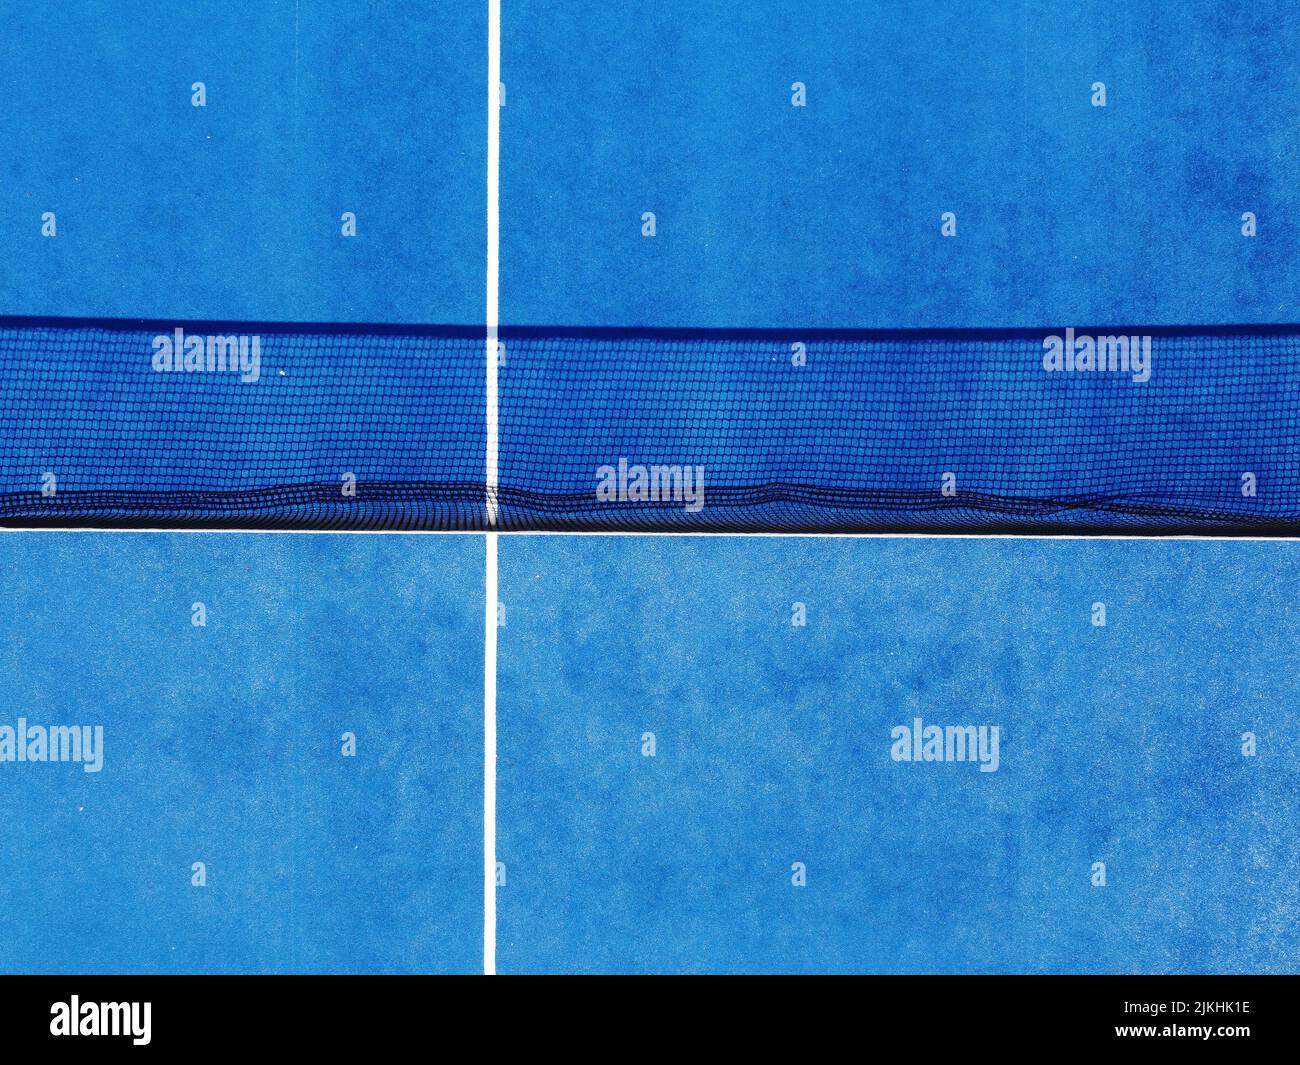 vista aérea de una pista de paddle de césped artificial azul Foto de stock